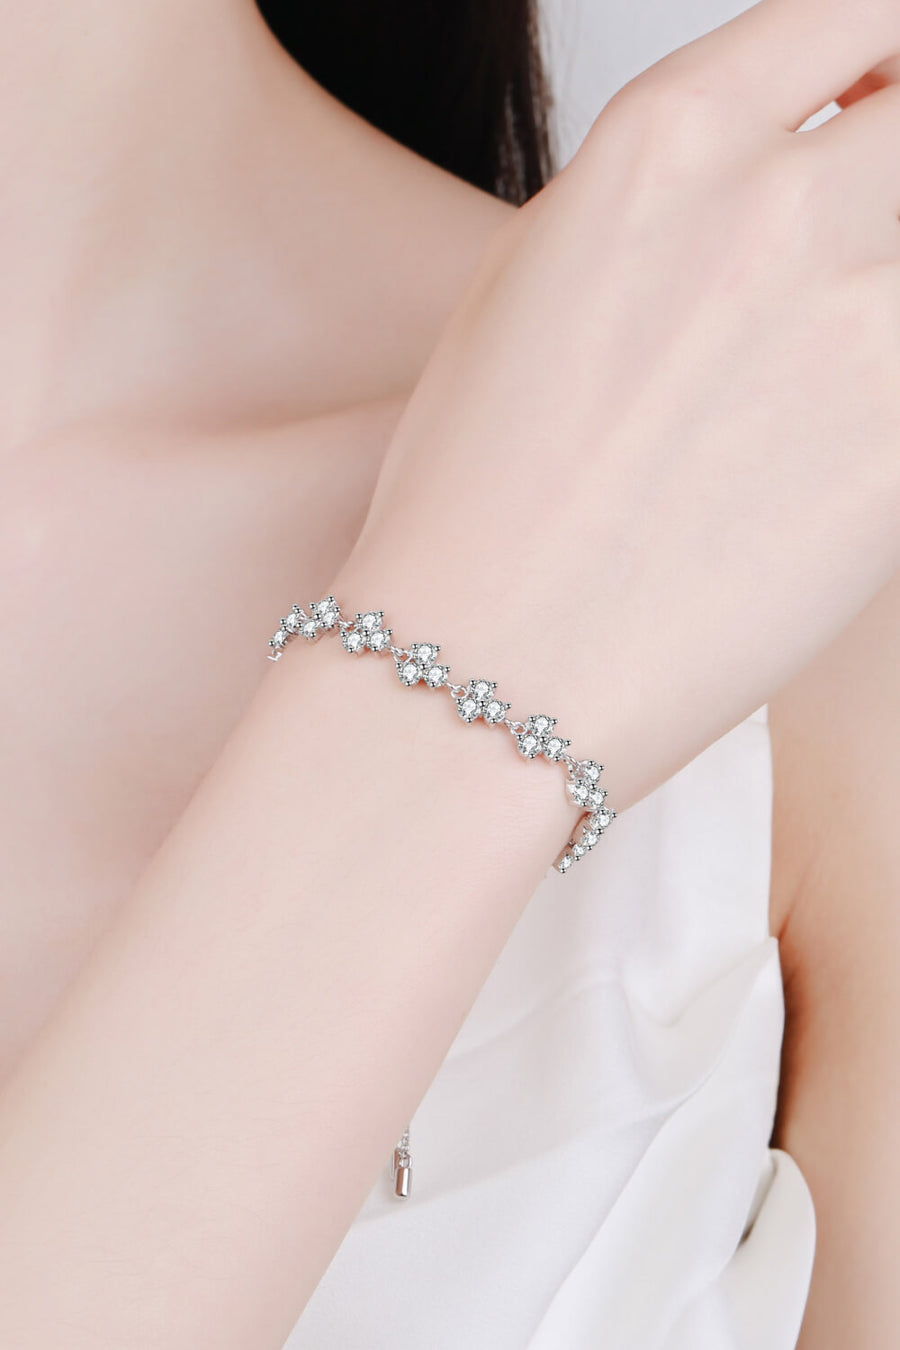 1# BEST Diamond Necklace Bracelet Jewelry Bundle Set Gift for Women | #1 Best Most Top Trendy Trending Butterfly Diamond Necklace Bracelet Jewelry Gift for Women, Mother, Wife, Daughter, Ladies | MASON New York